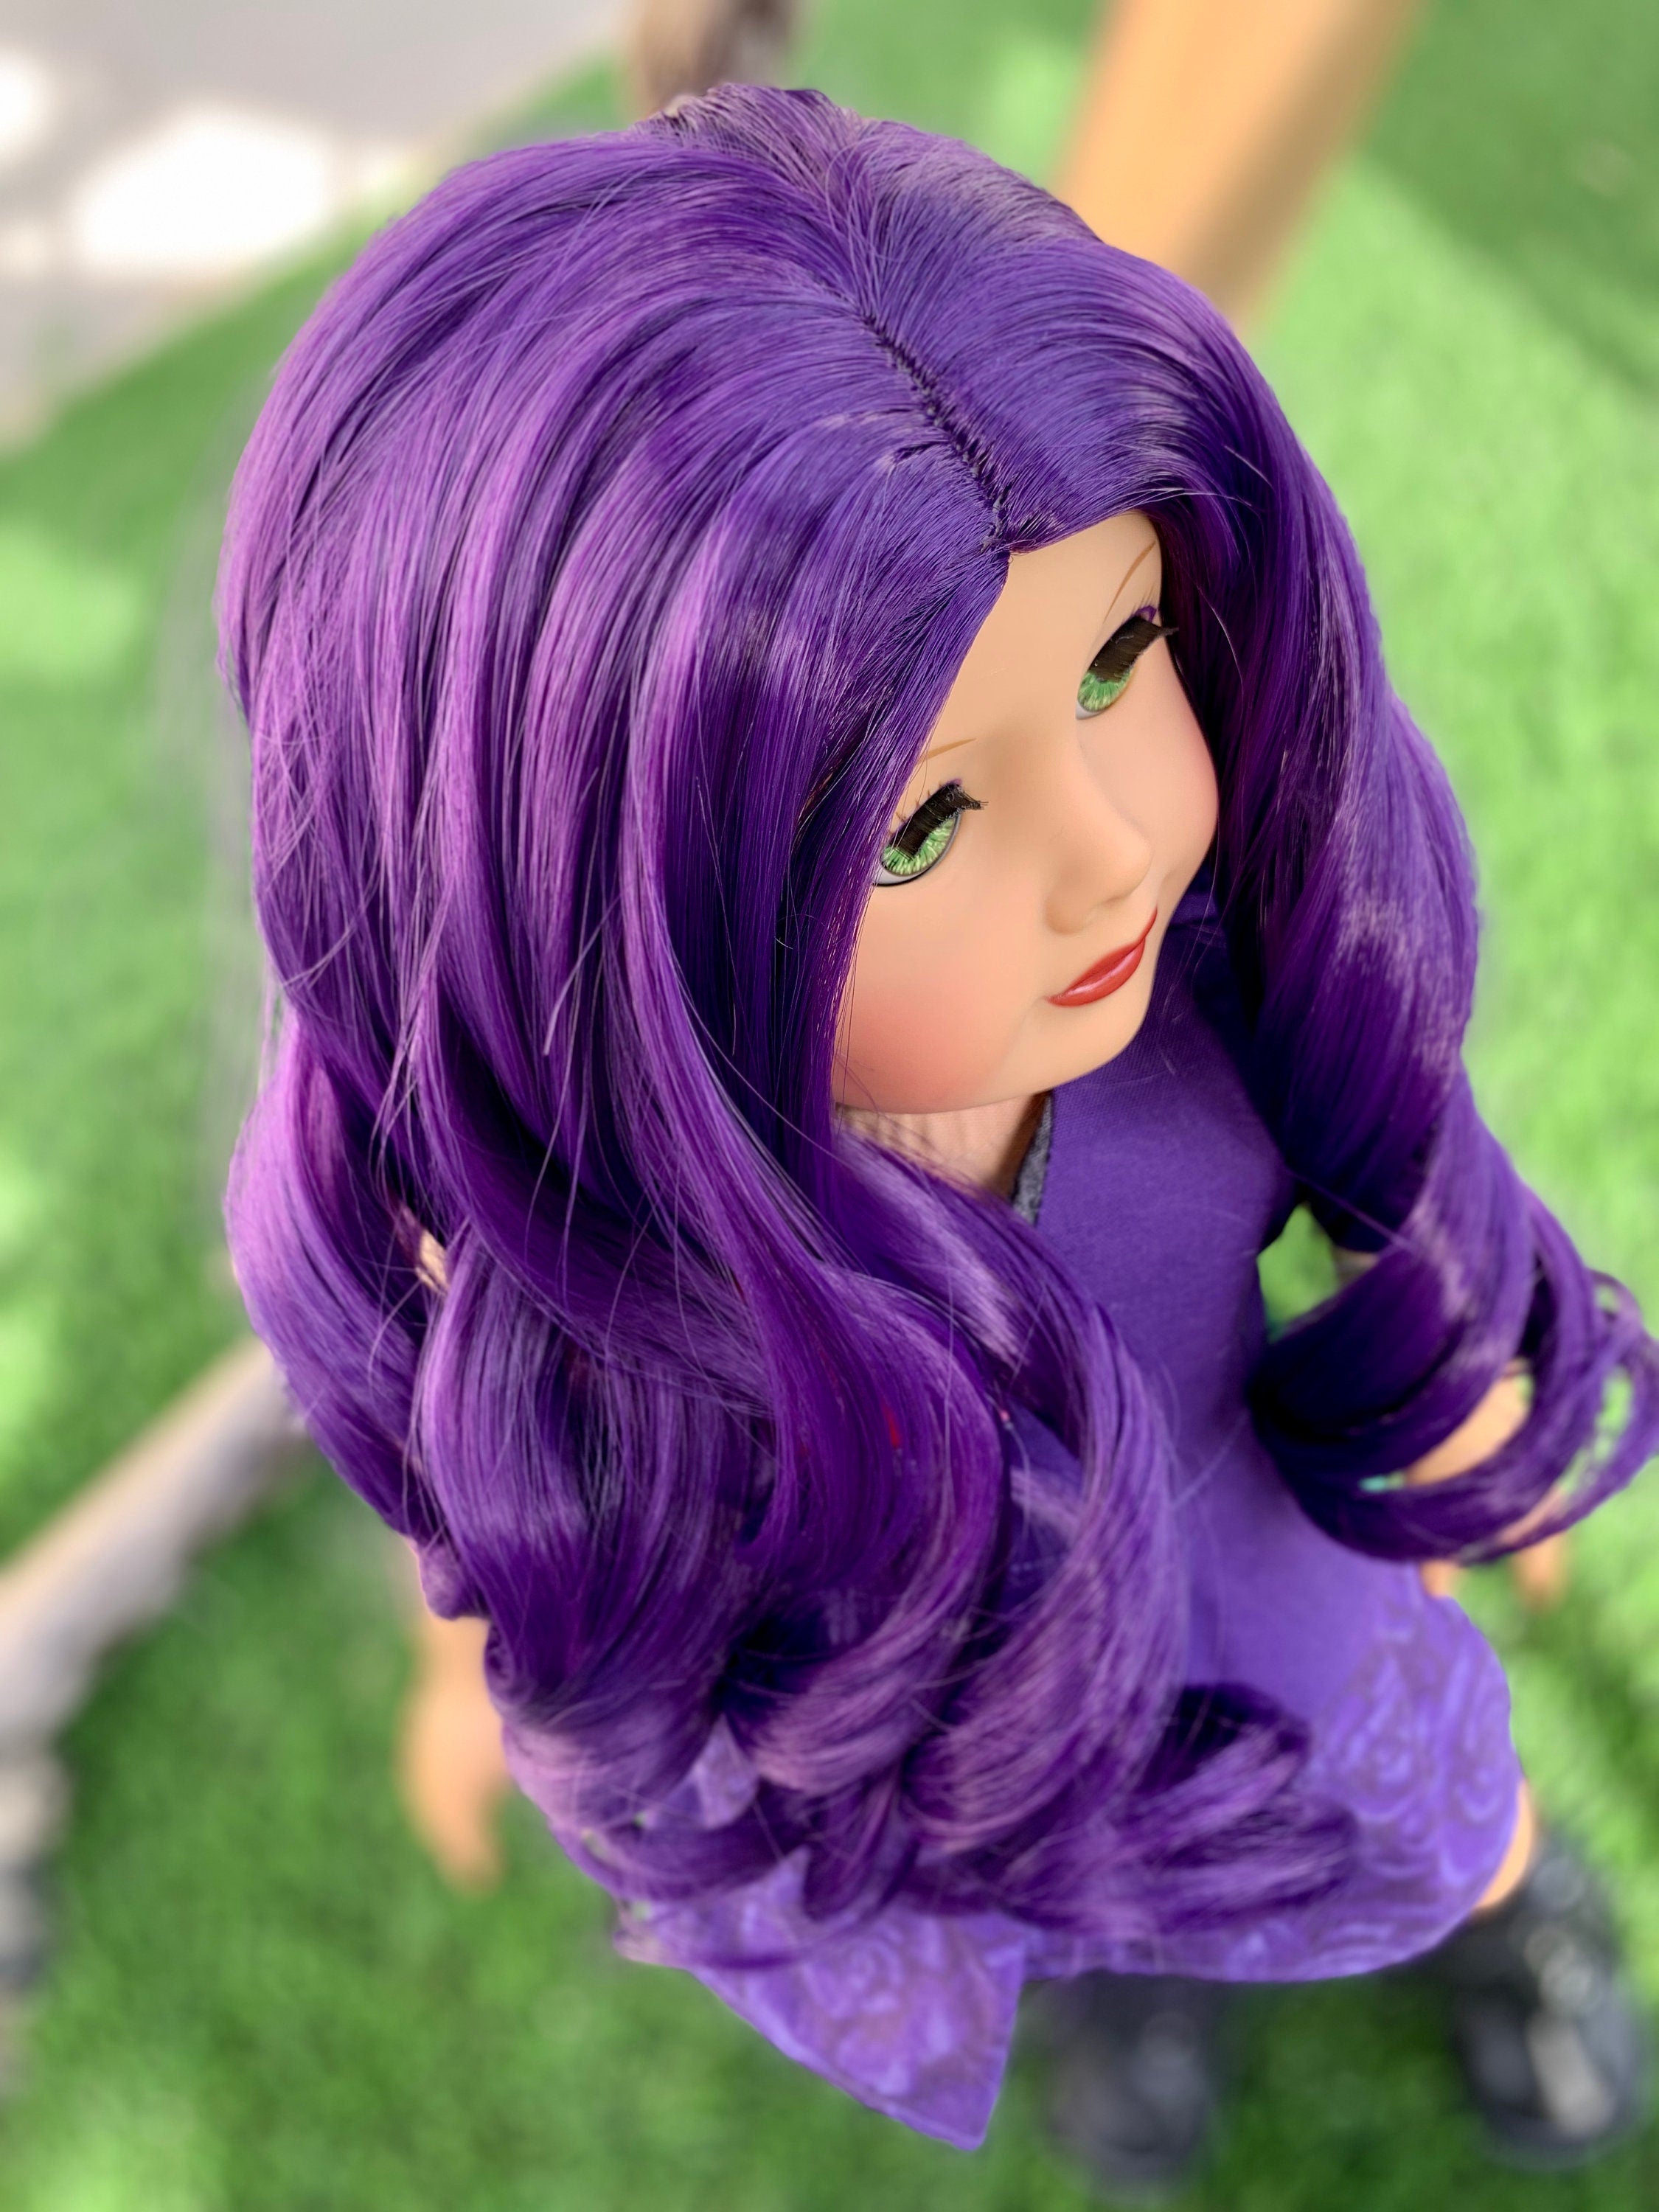 Custom doll wig for 18" American Girl Dolls-Heat Safe-Tangle Resistant-fits 10-11" head size of 18" dolls OG Journey Gotz  Descendants Mal